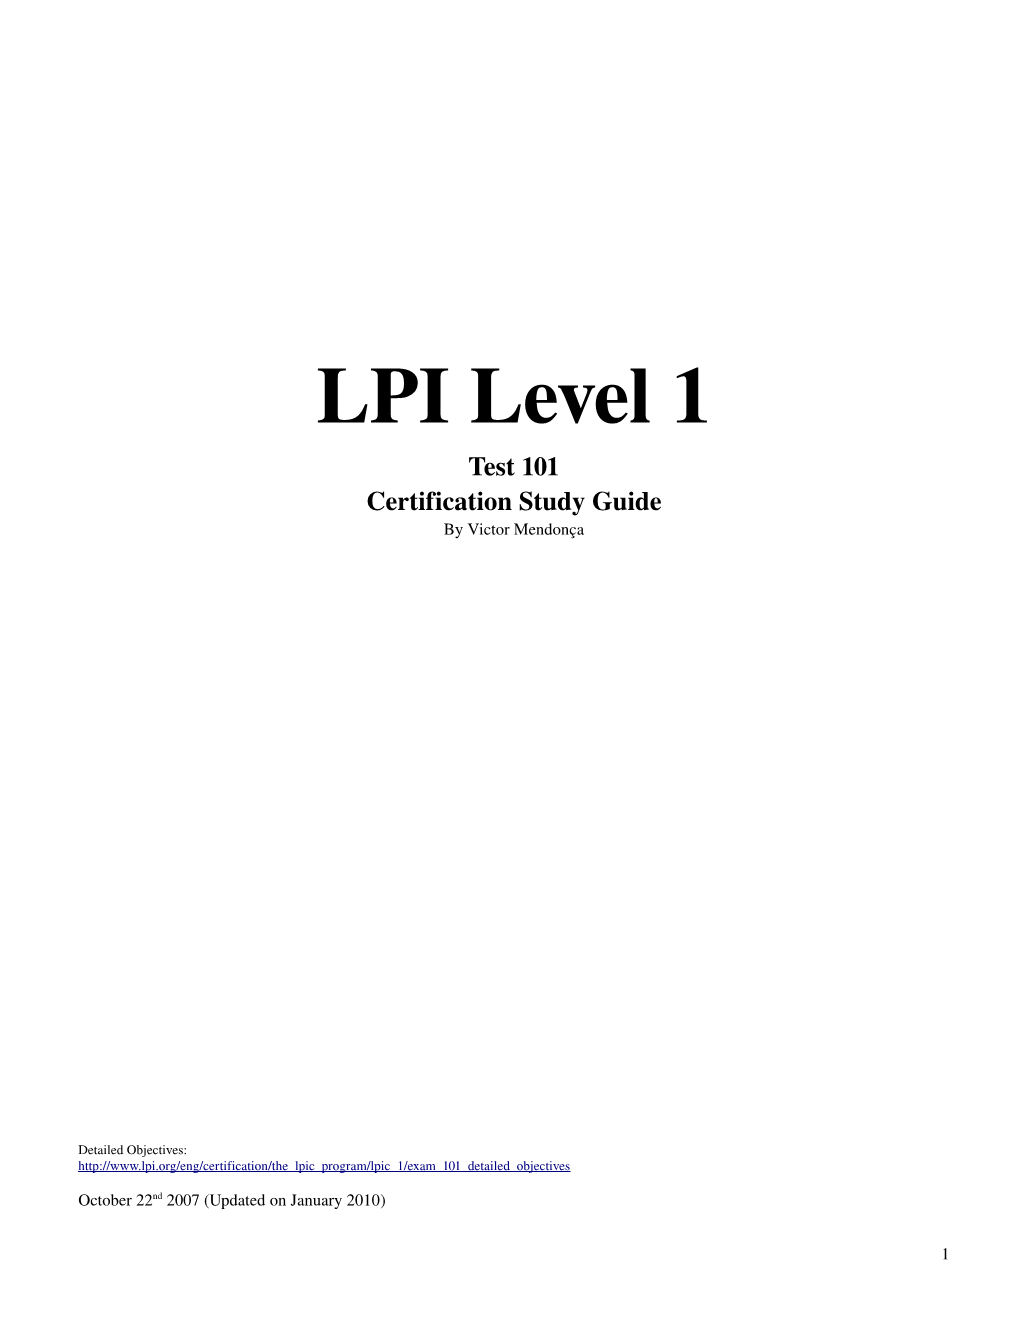 LPI Level 1 Test 101 Certification Study Guide by Victor Mendonça